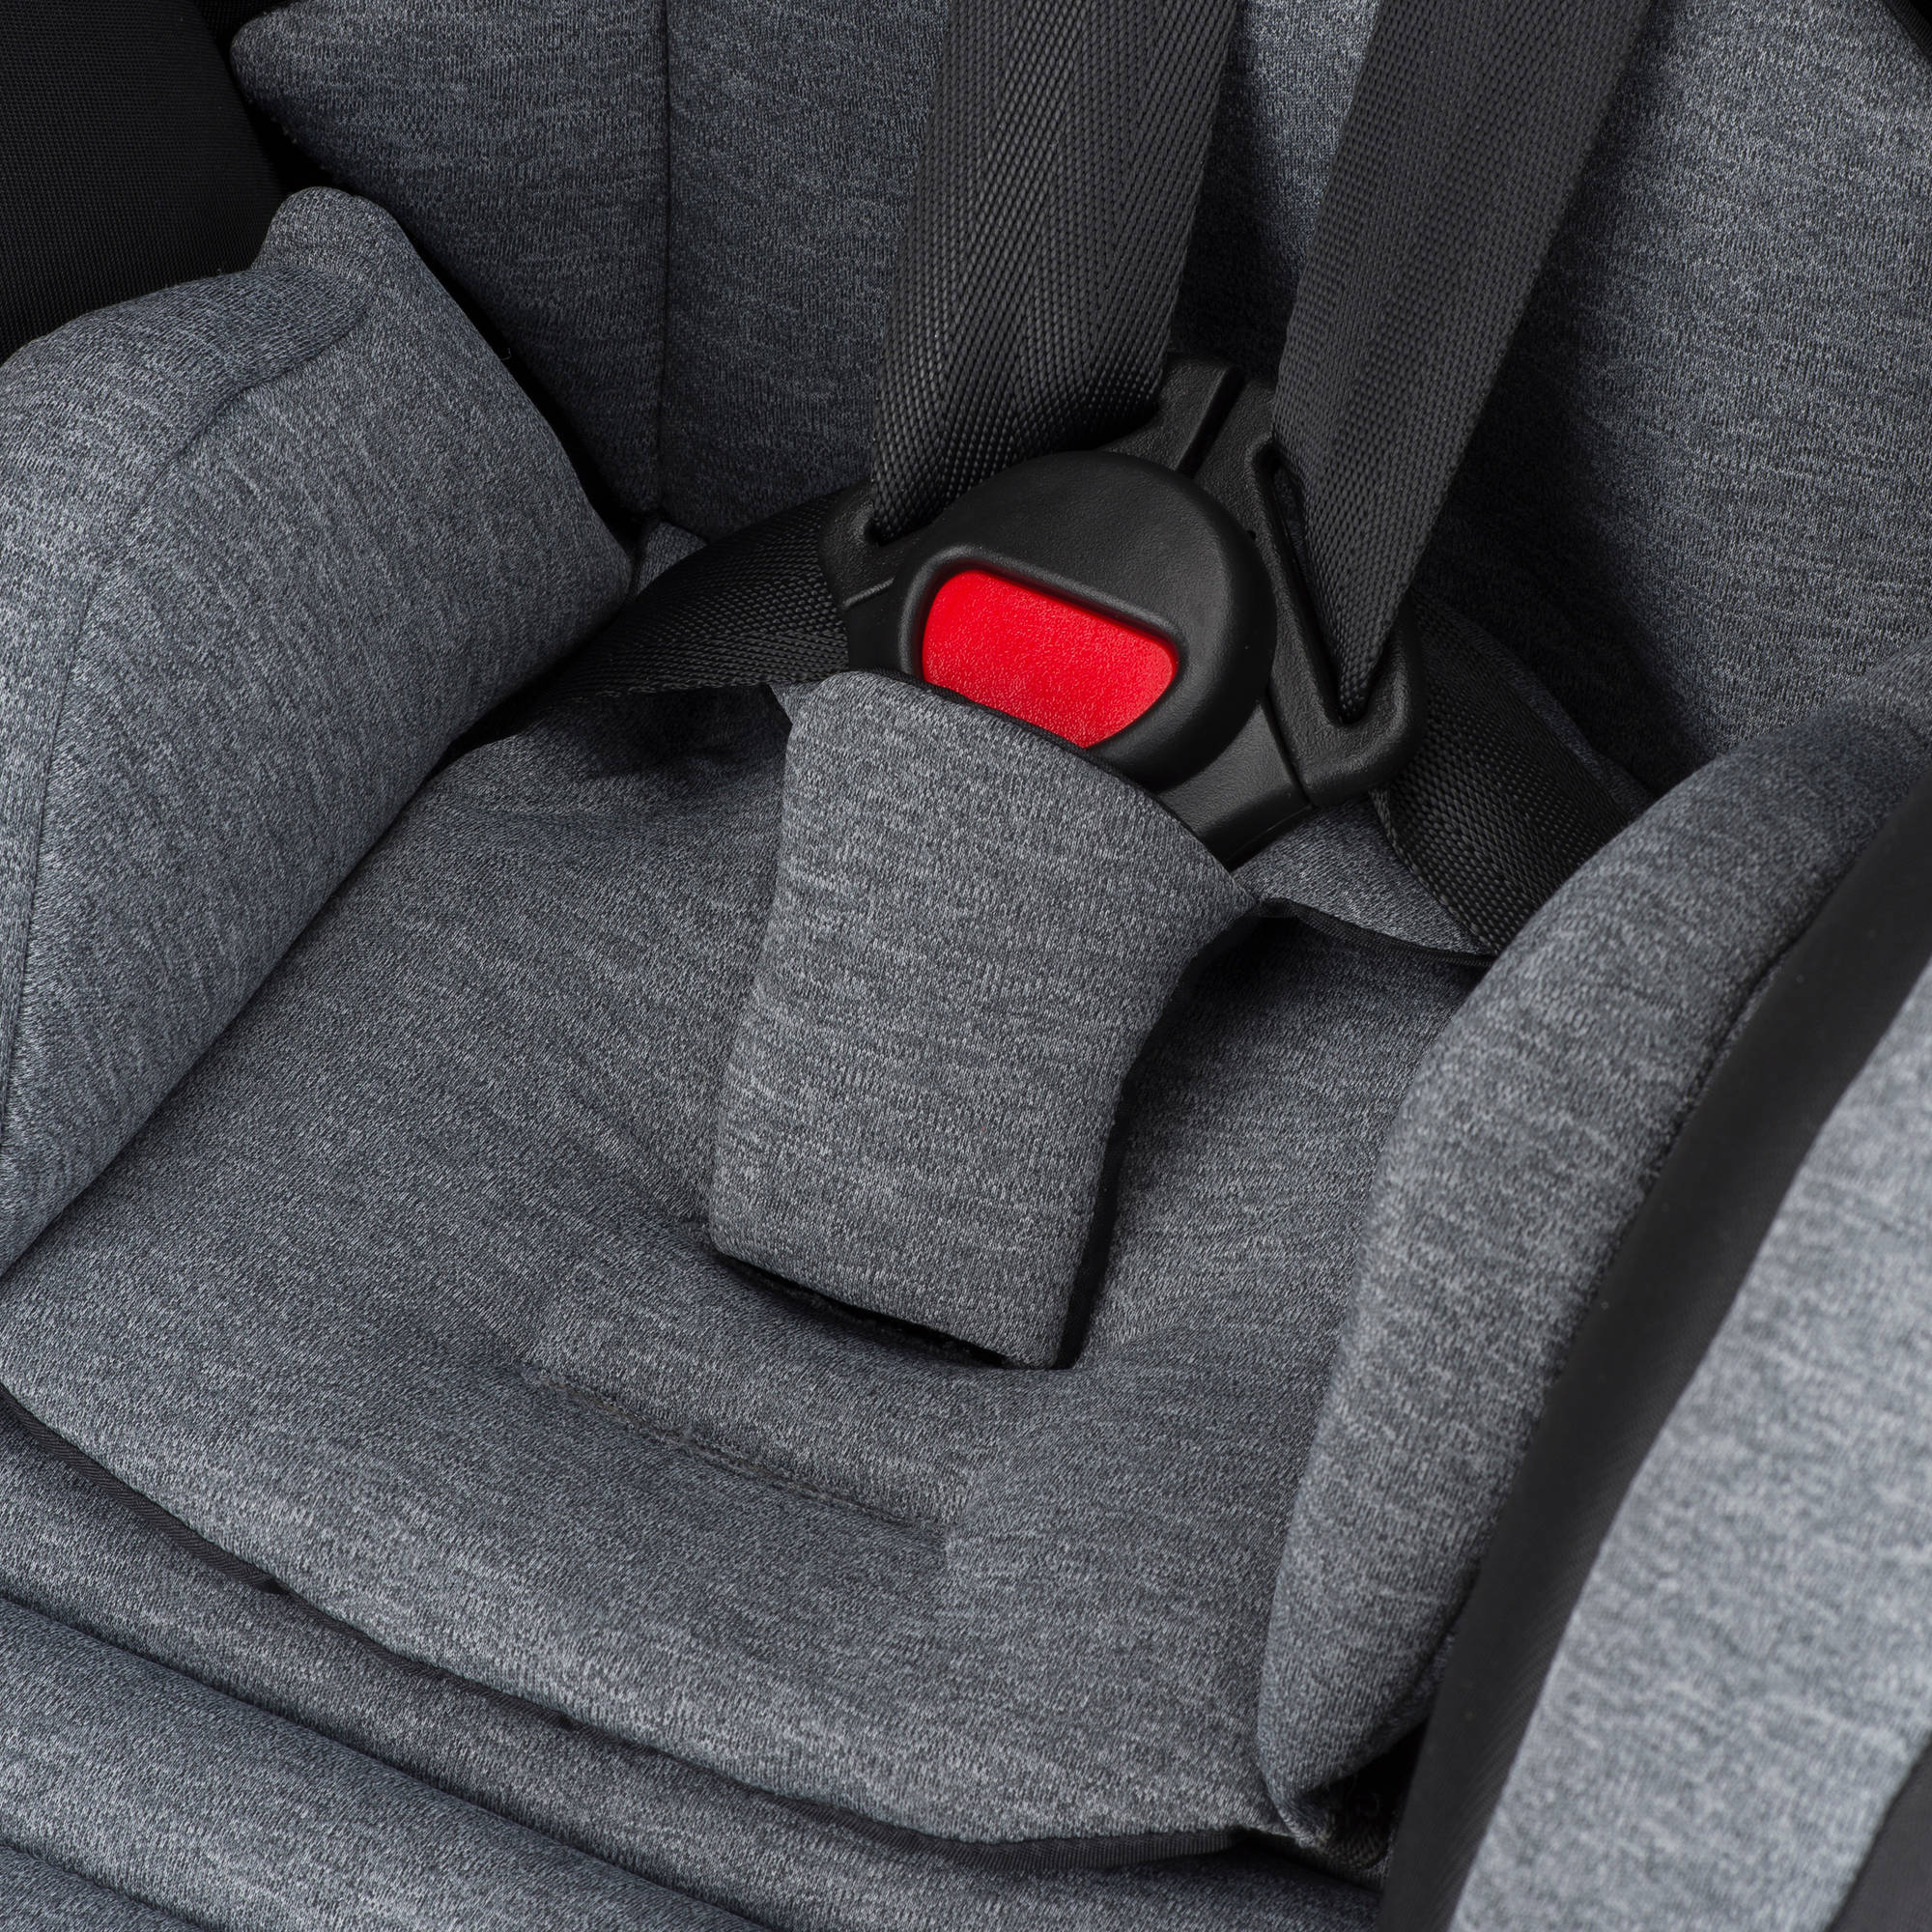 Evenflo Advanced SensorSafe Titan 65 Convertible Car Seat, Choose Your Color - image 8 of 12